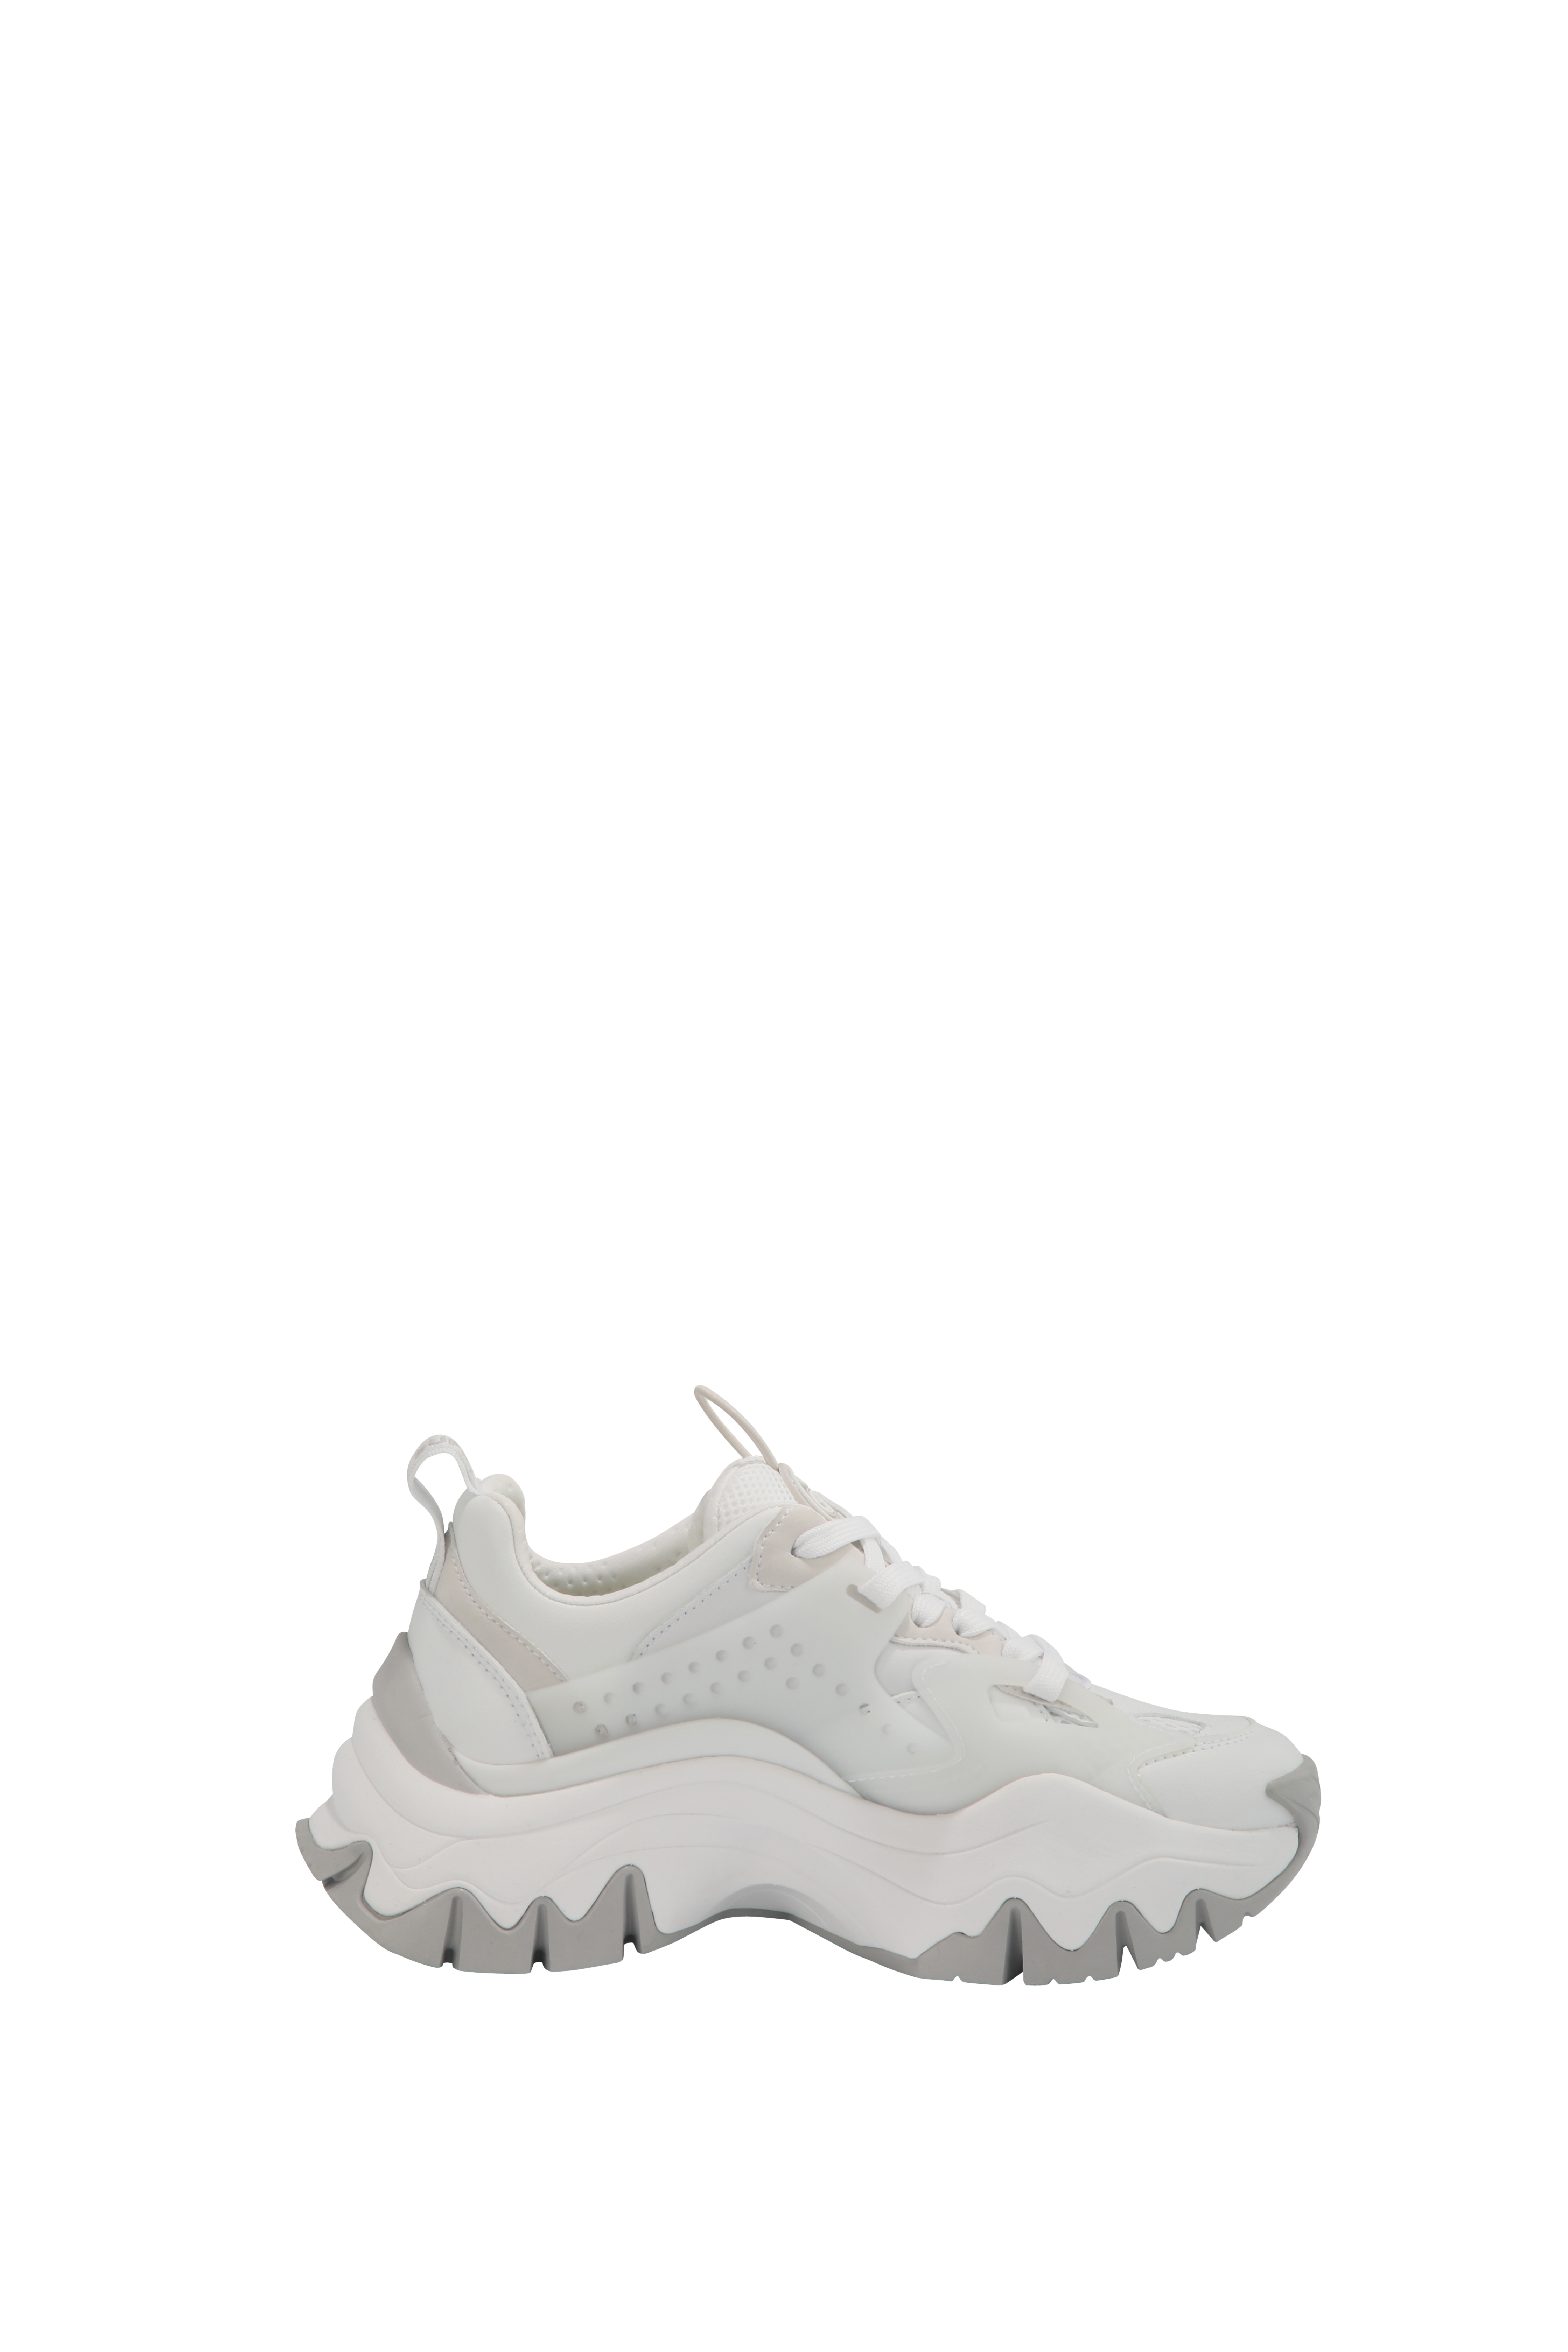 Buffalo Trail One - Sneaker Low - Imi Nappa/Imi Nubuck - White Imitation leather